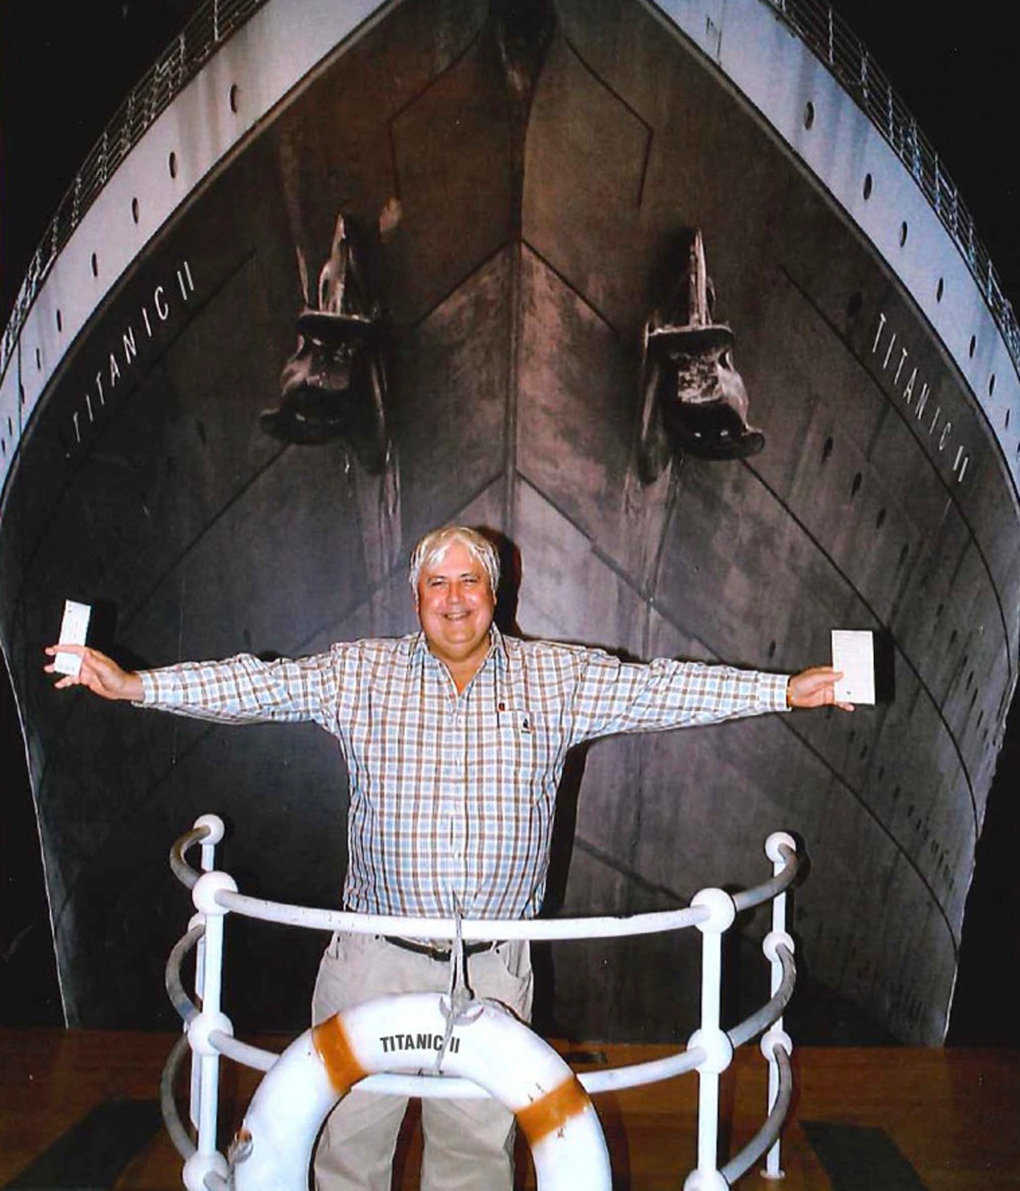 Plans for Titanic replica garnering interest